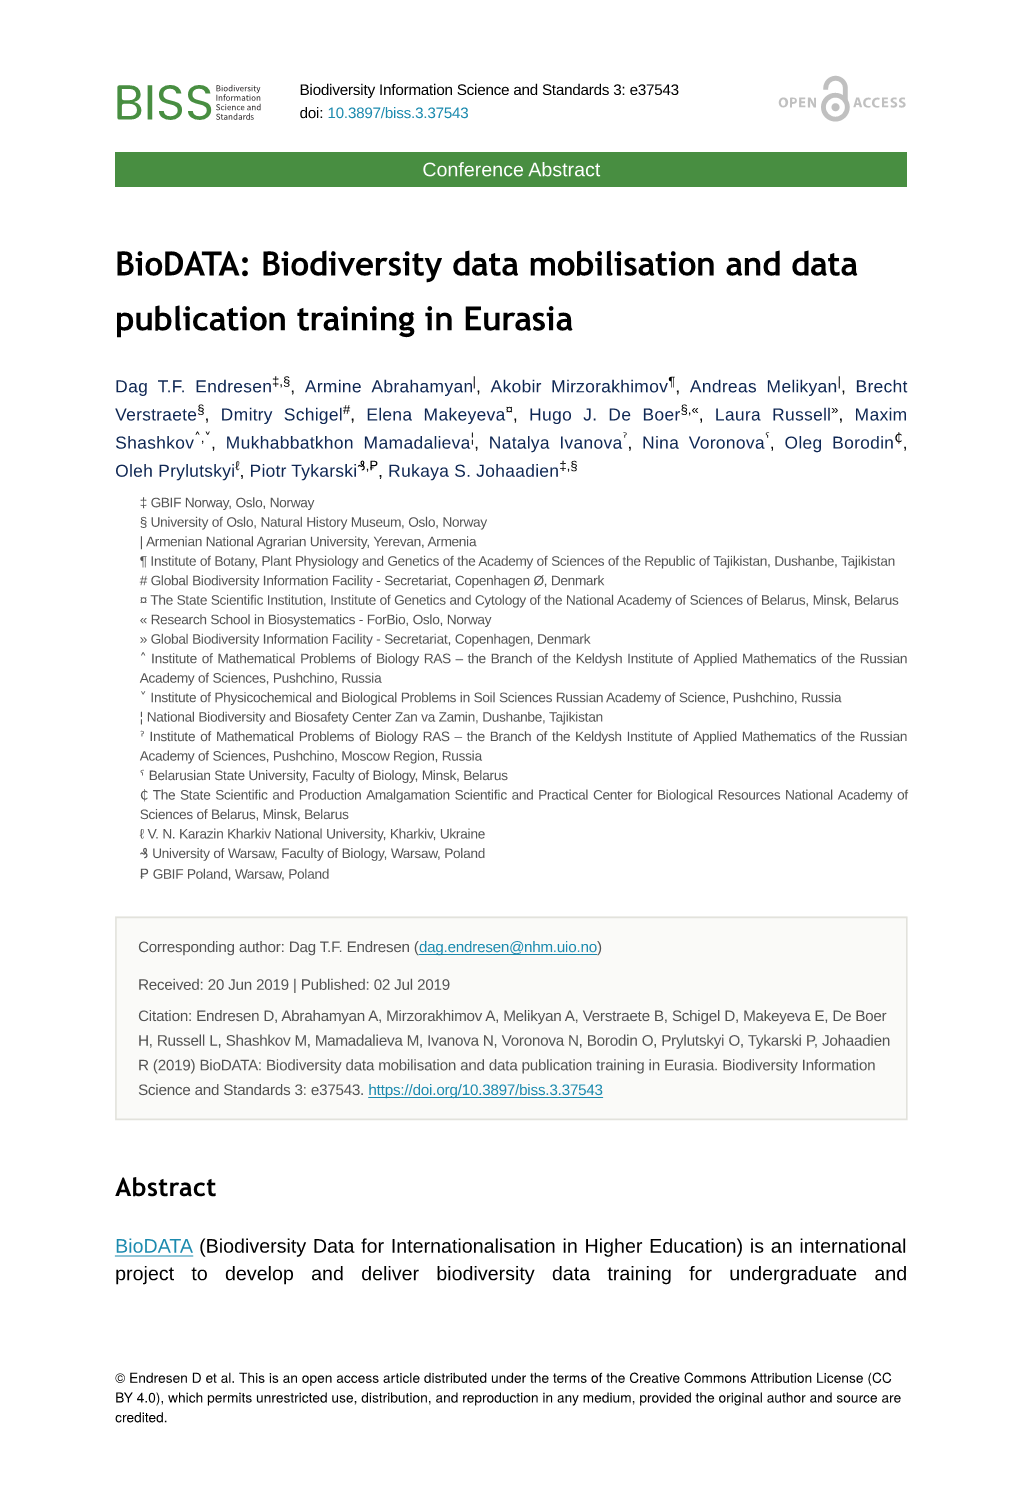 Biodata: Biodiversity Data Mobilisation and Data Publication Training in Eurasia